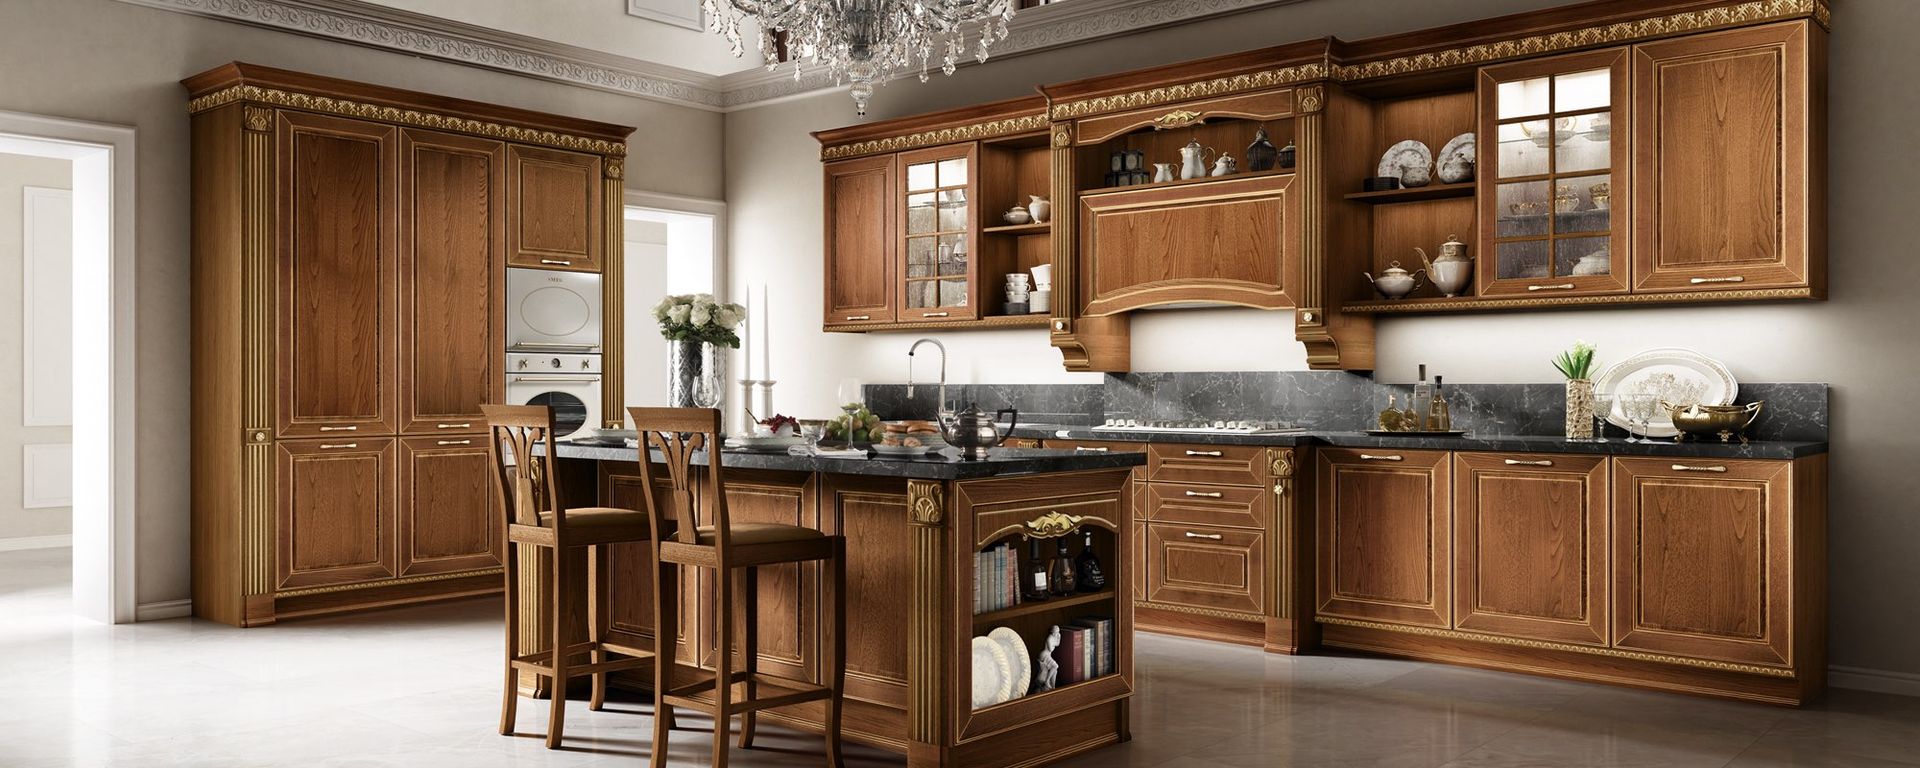 vista laterale di una cucina bianca in legno classica con sedie in legno -Dolcevita